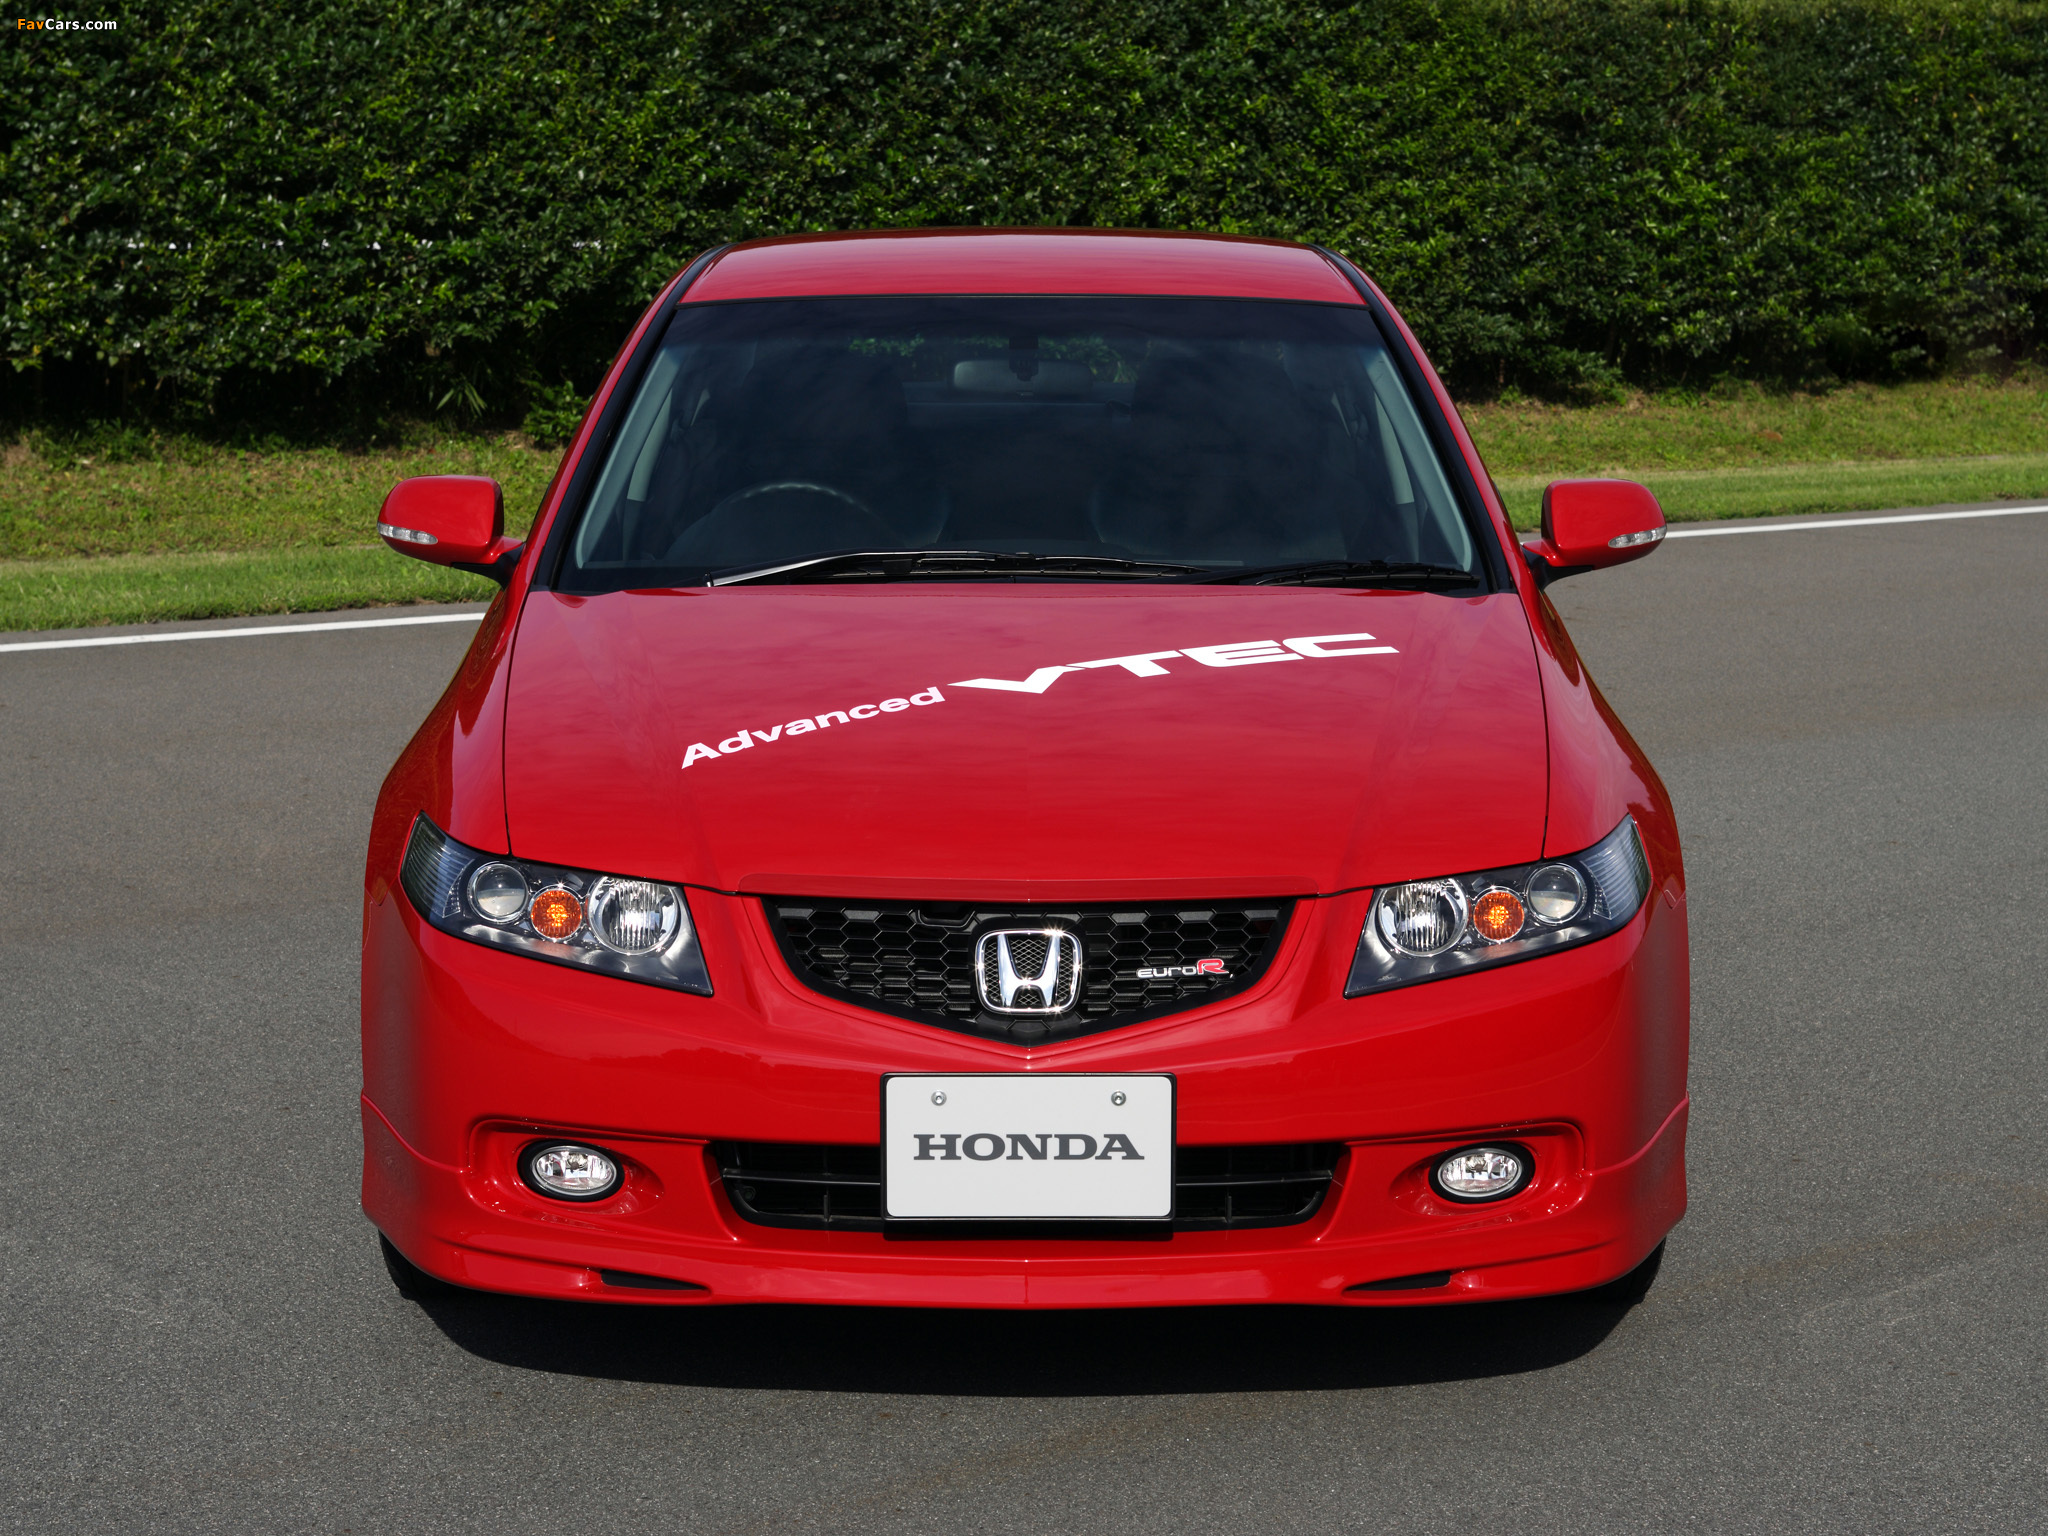 Honda euro